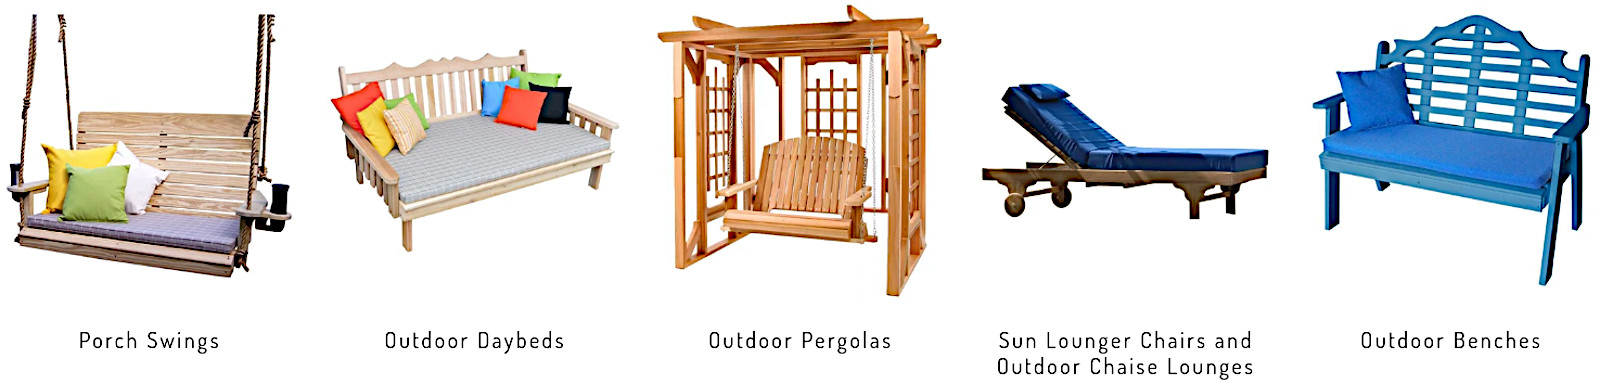 outdoor furniture cost-effective